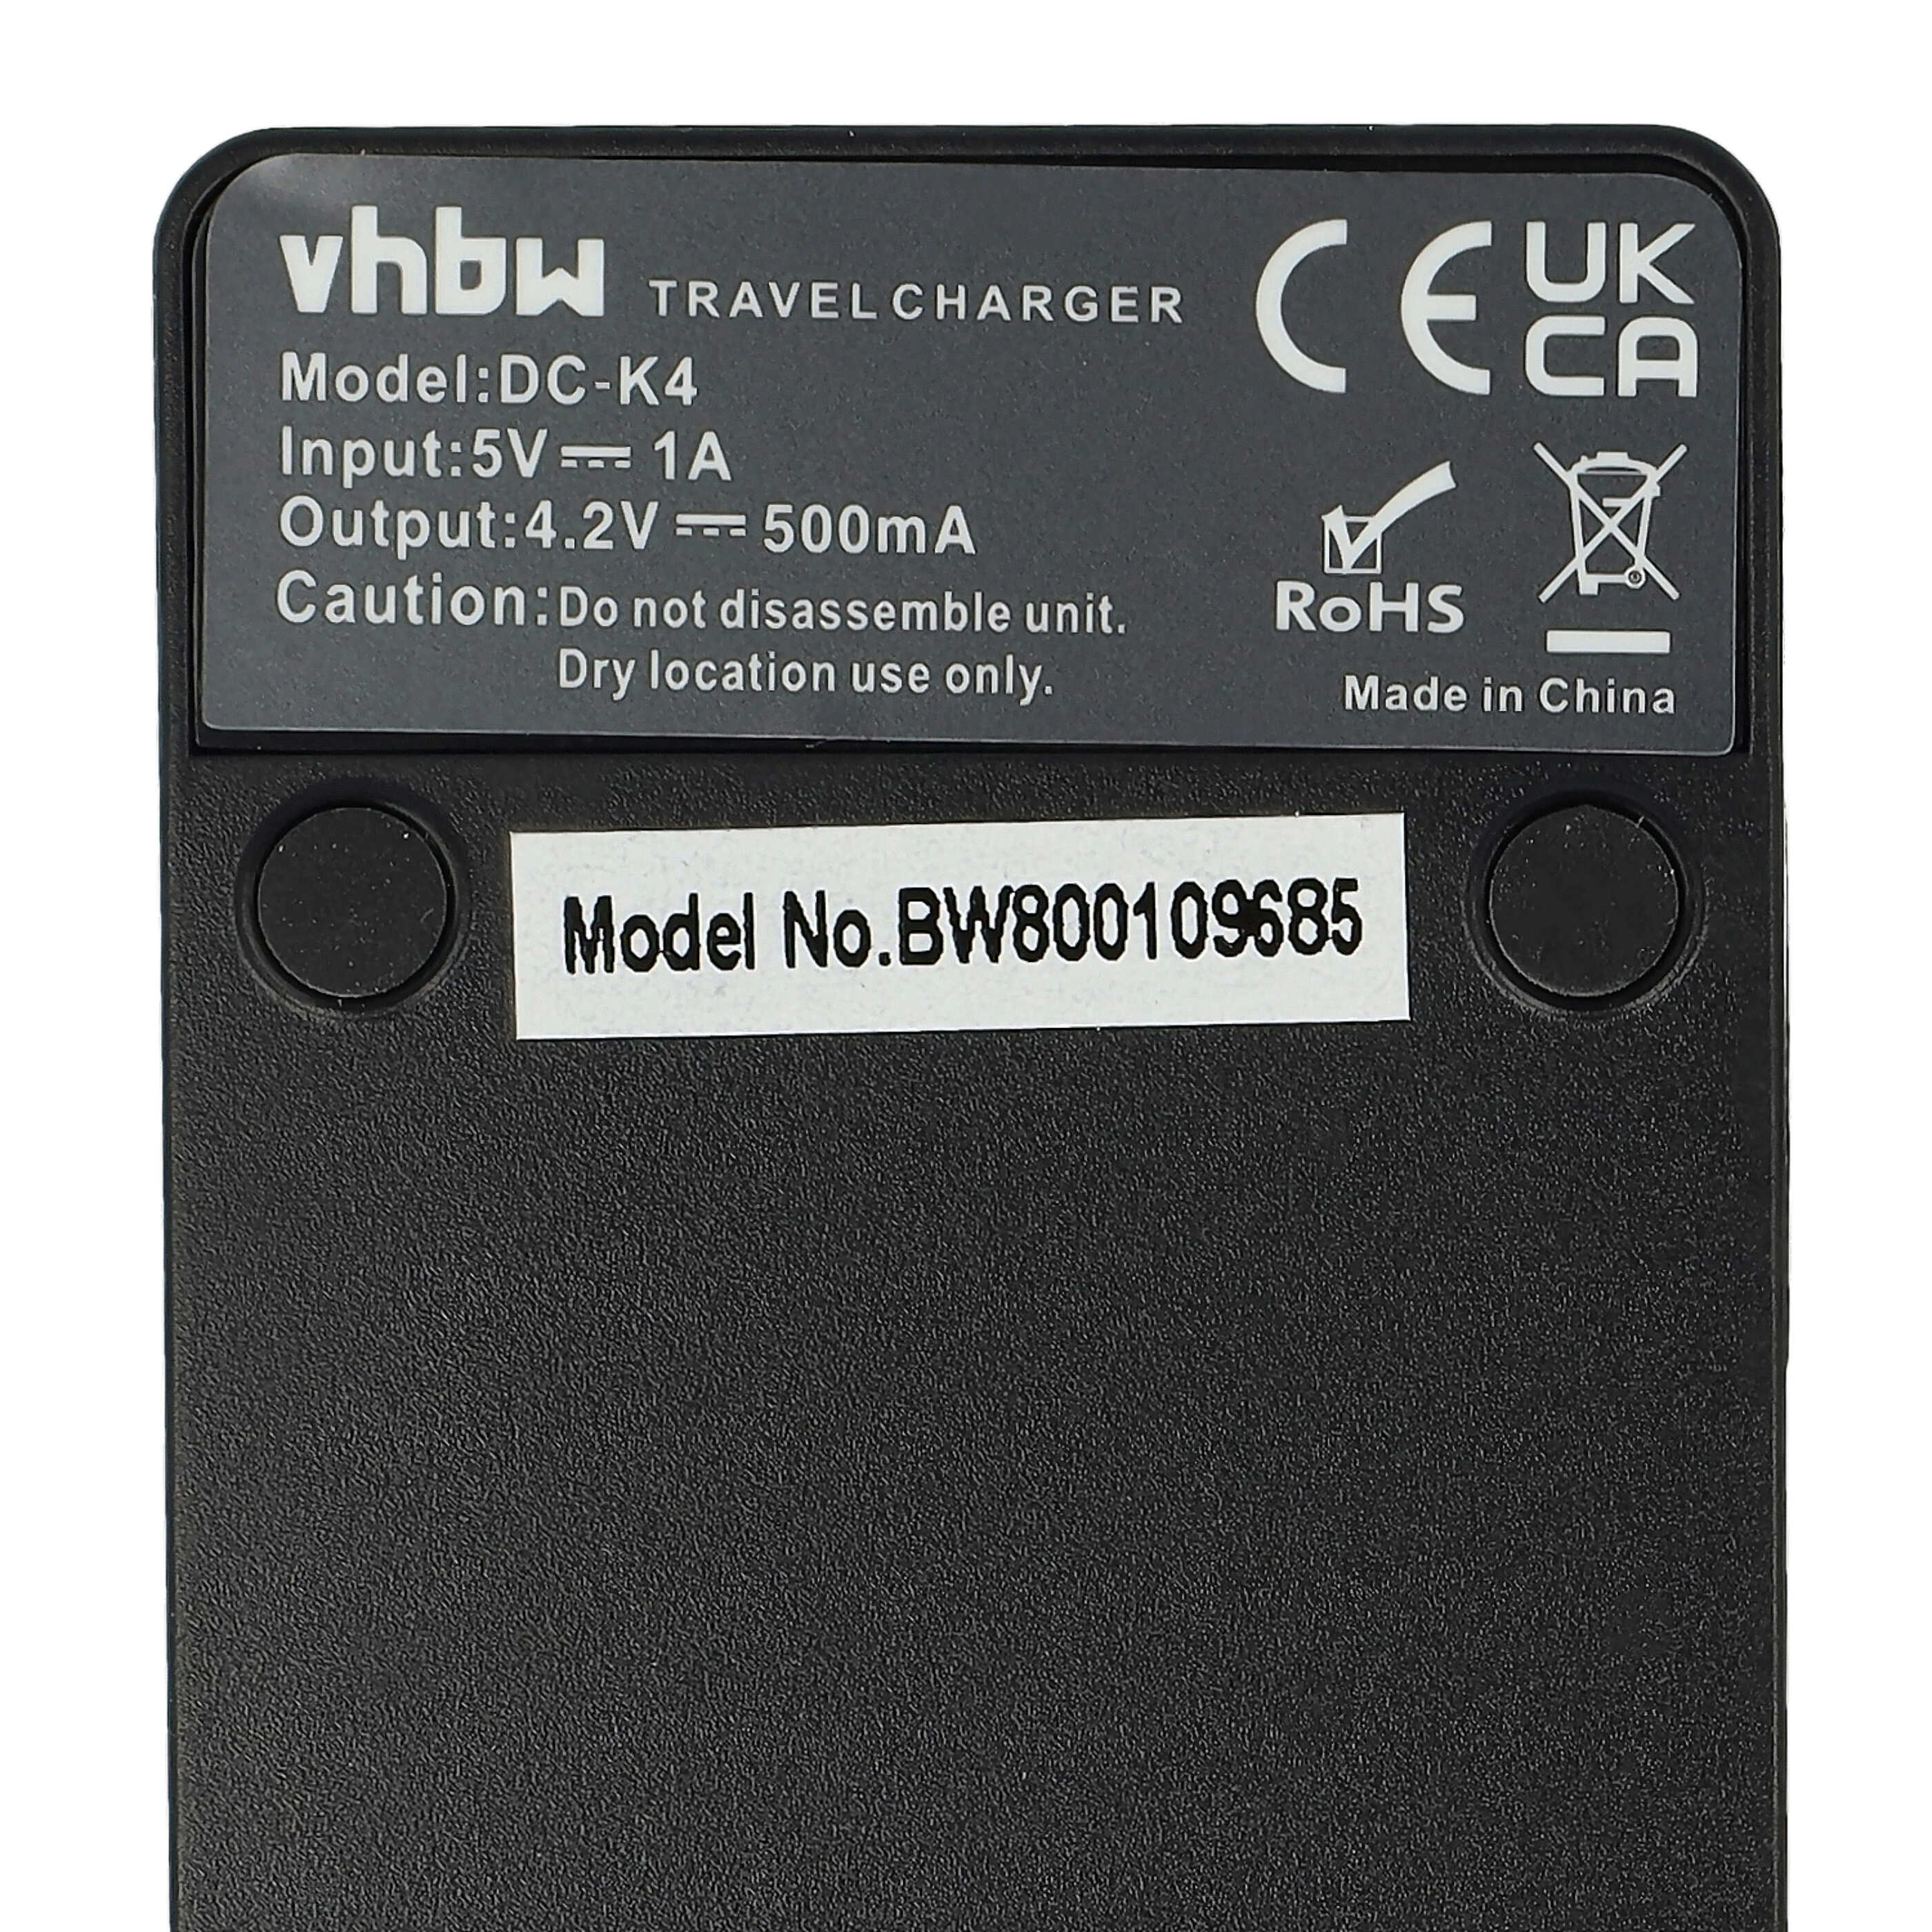 Battery Charger replaces Nikon MH-66 suitable for Nikon EN-EL19 Camera etc. - 0.5 A, 4.2 V